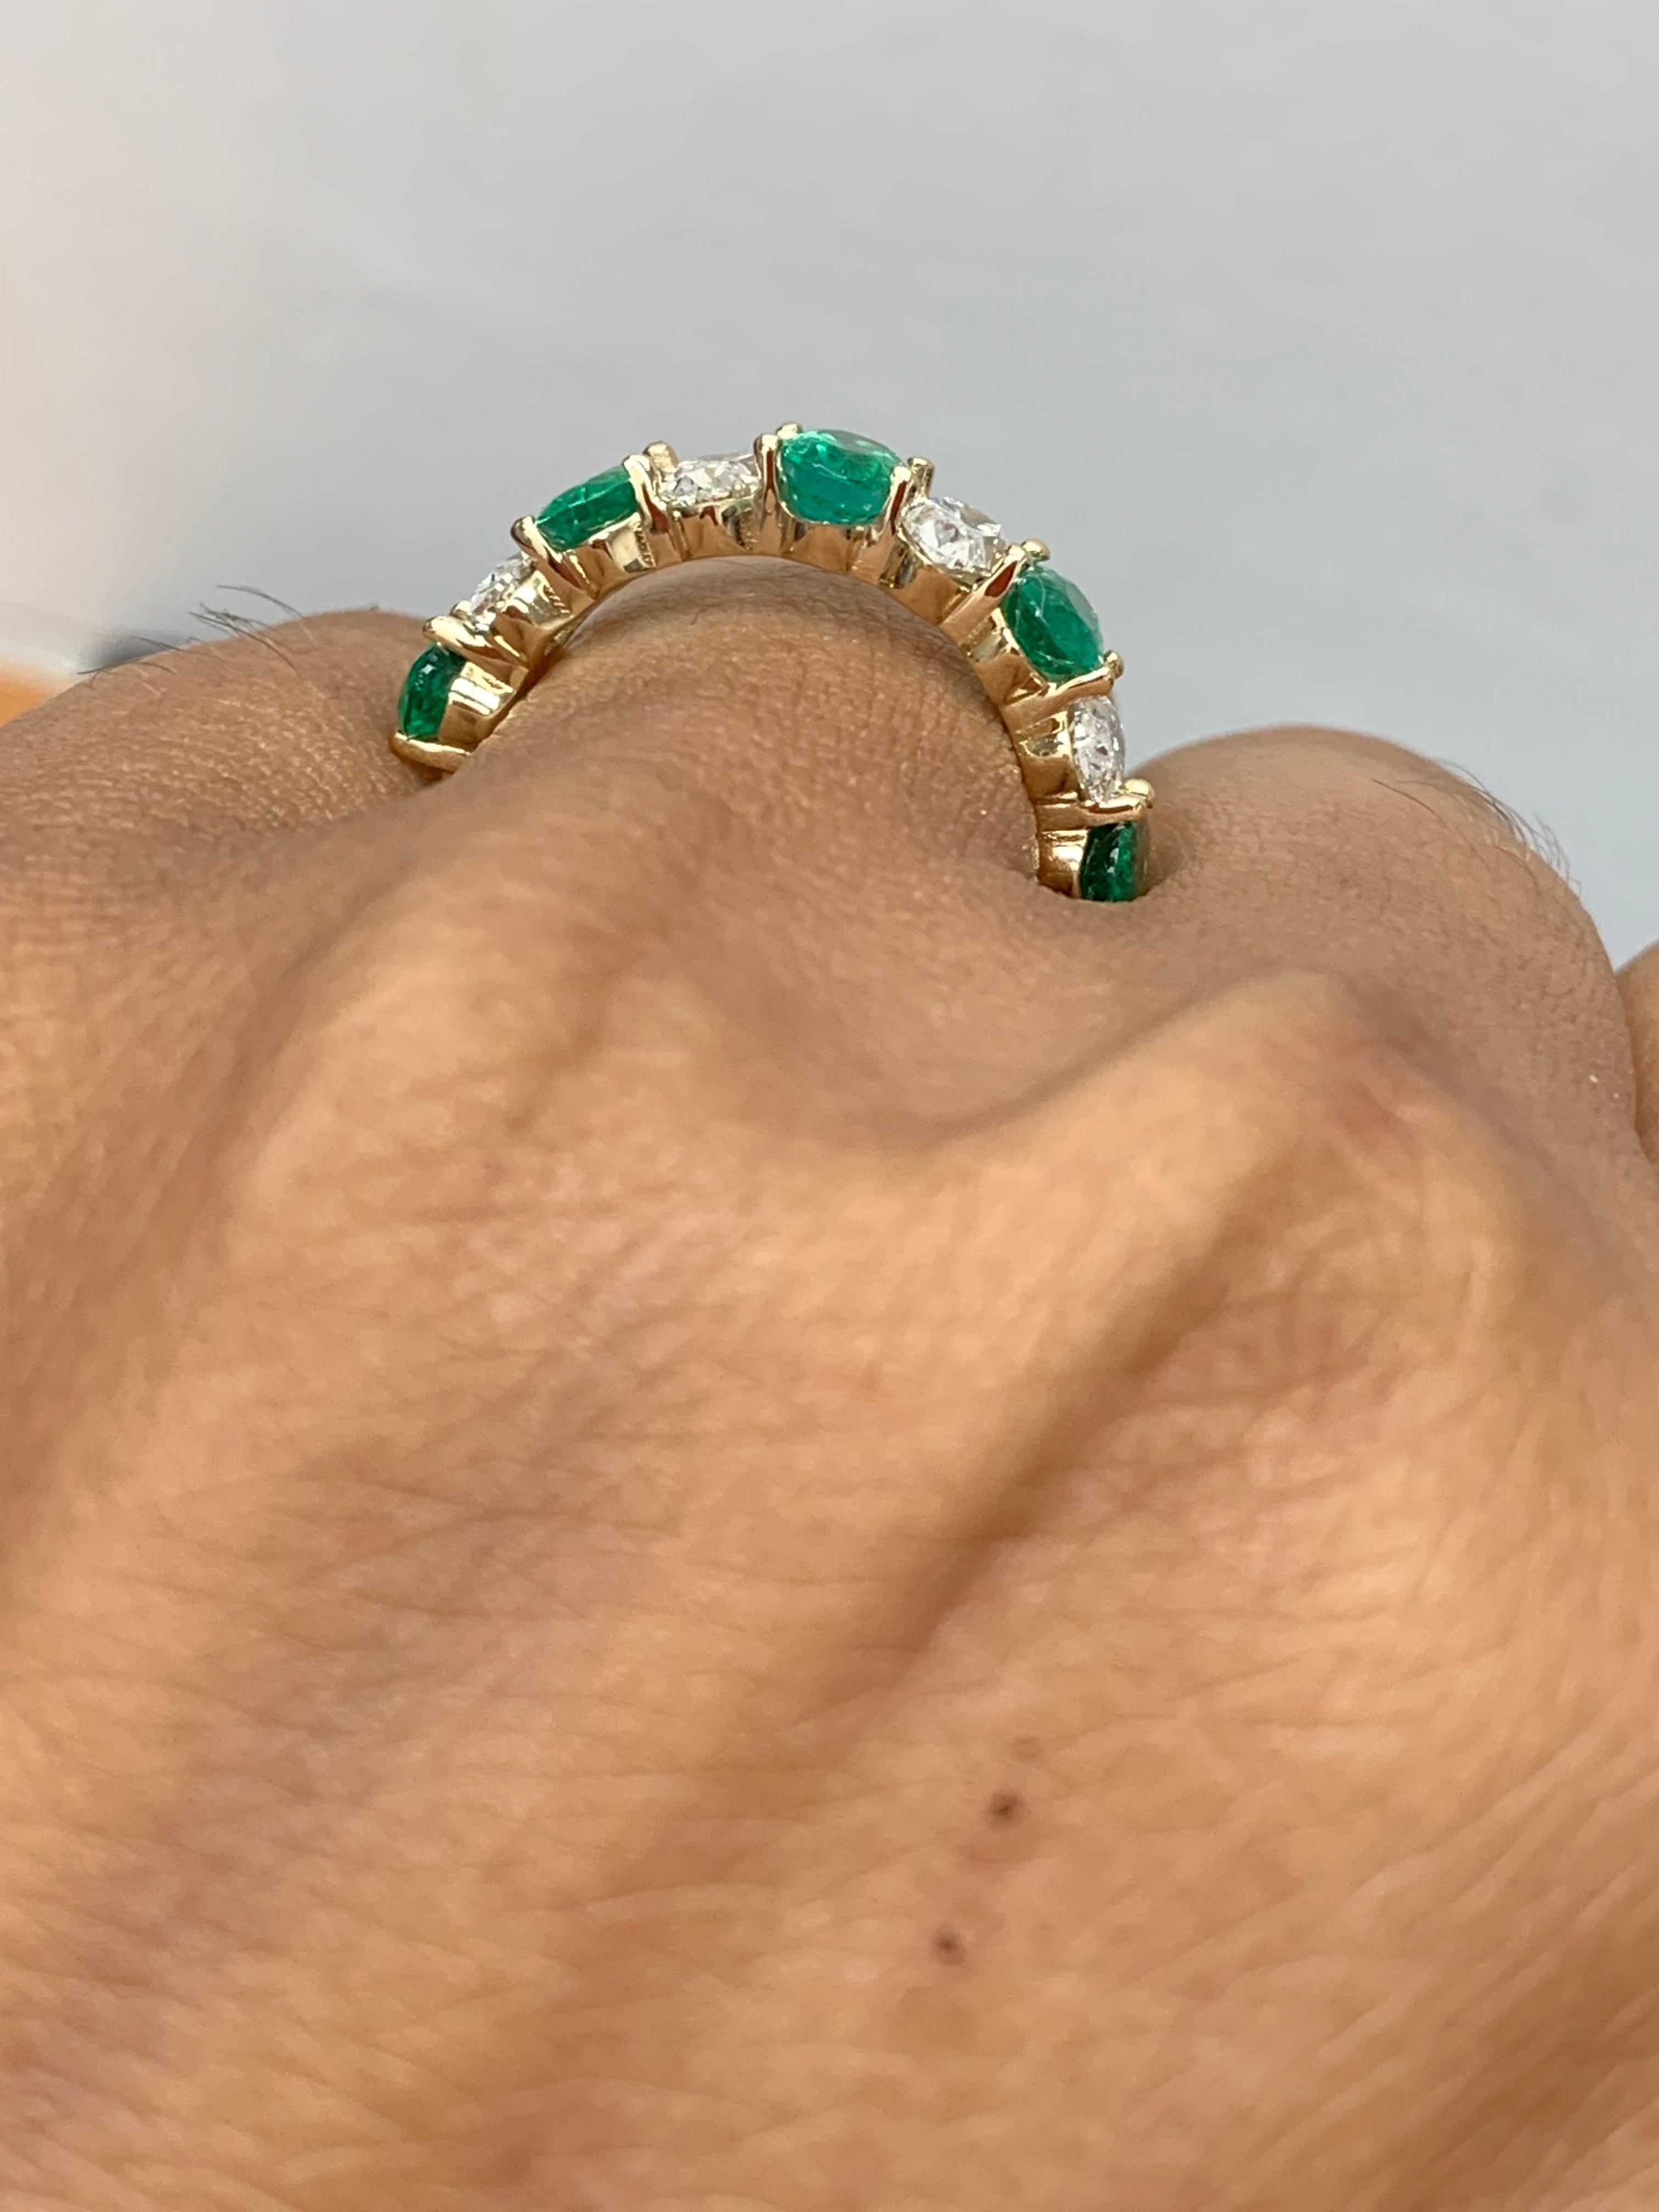 Women's 1.89 carat Oval Cut Emerald Diamond Eternity Wedding Band in 14K Yellow Gold For Sale